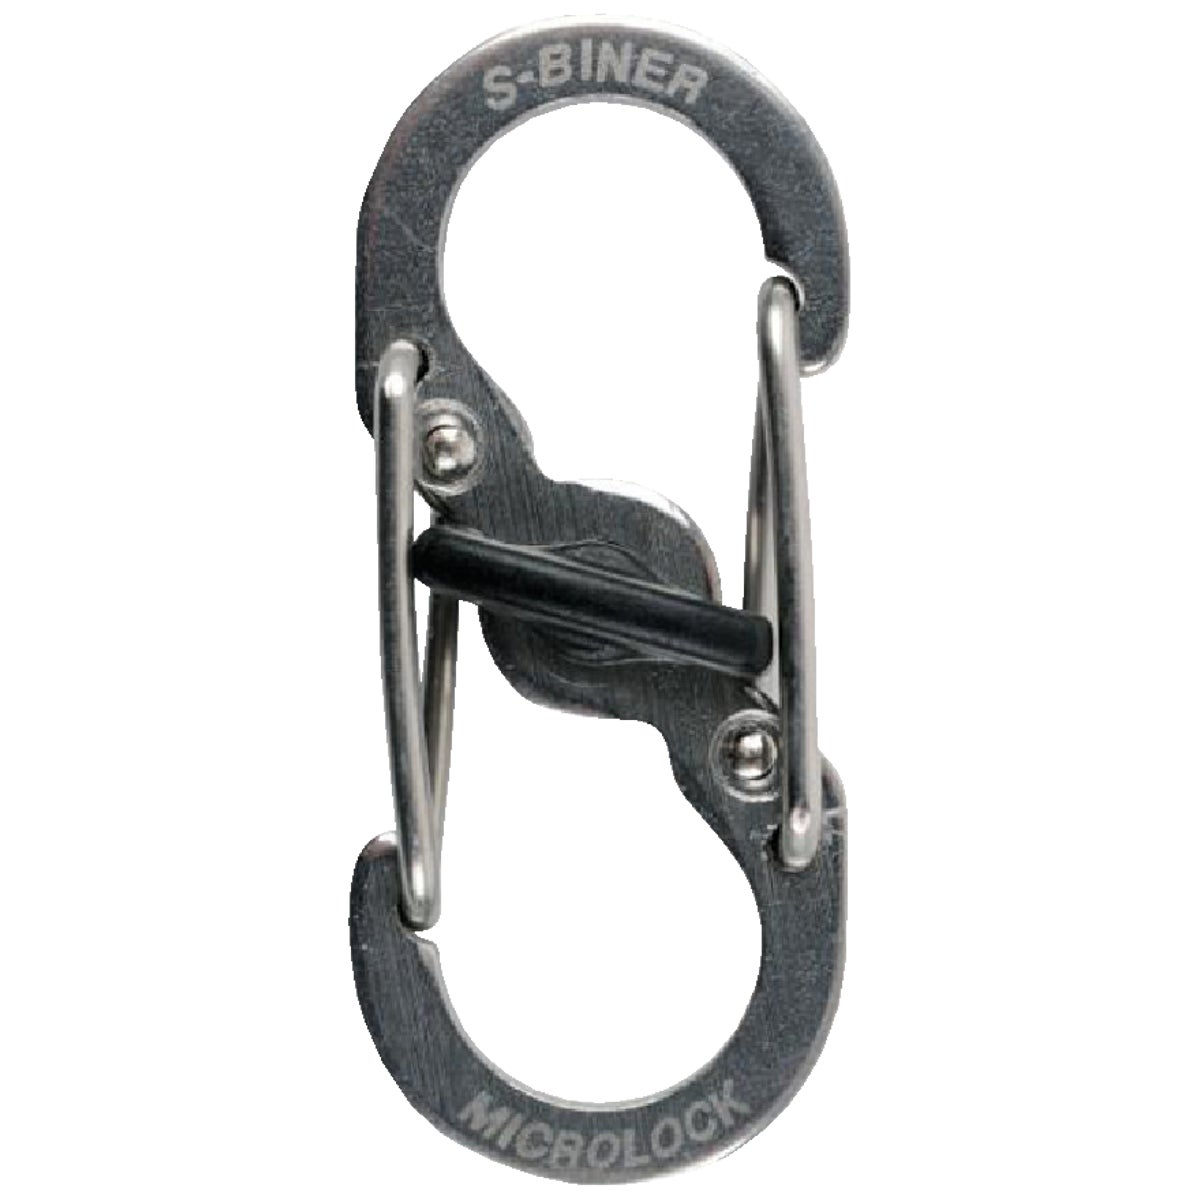 S-Clip Key Ring